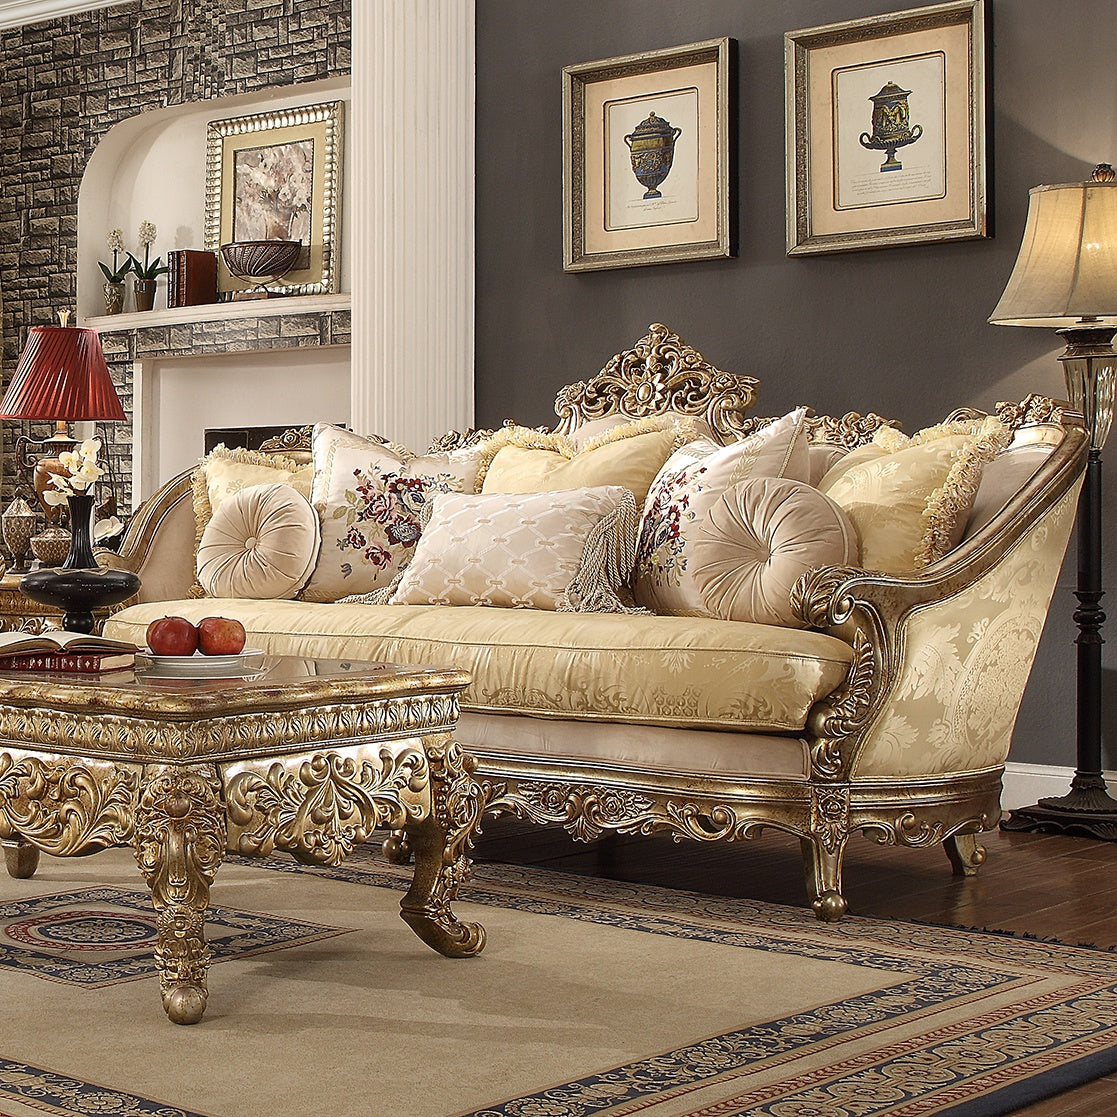 Fabric Sofa in Metallic Bright Gold Finish S2626 European Traditional Victorian